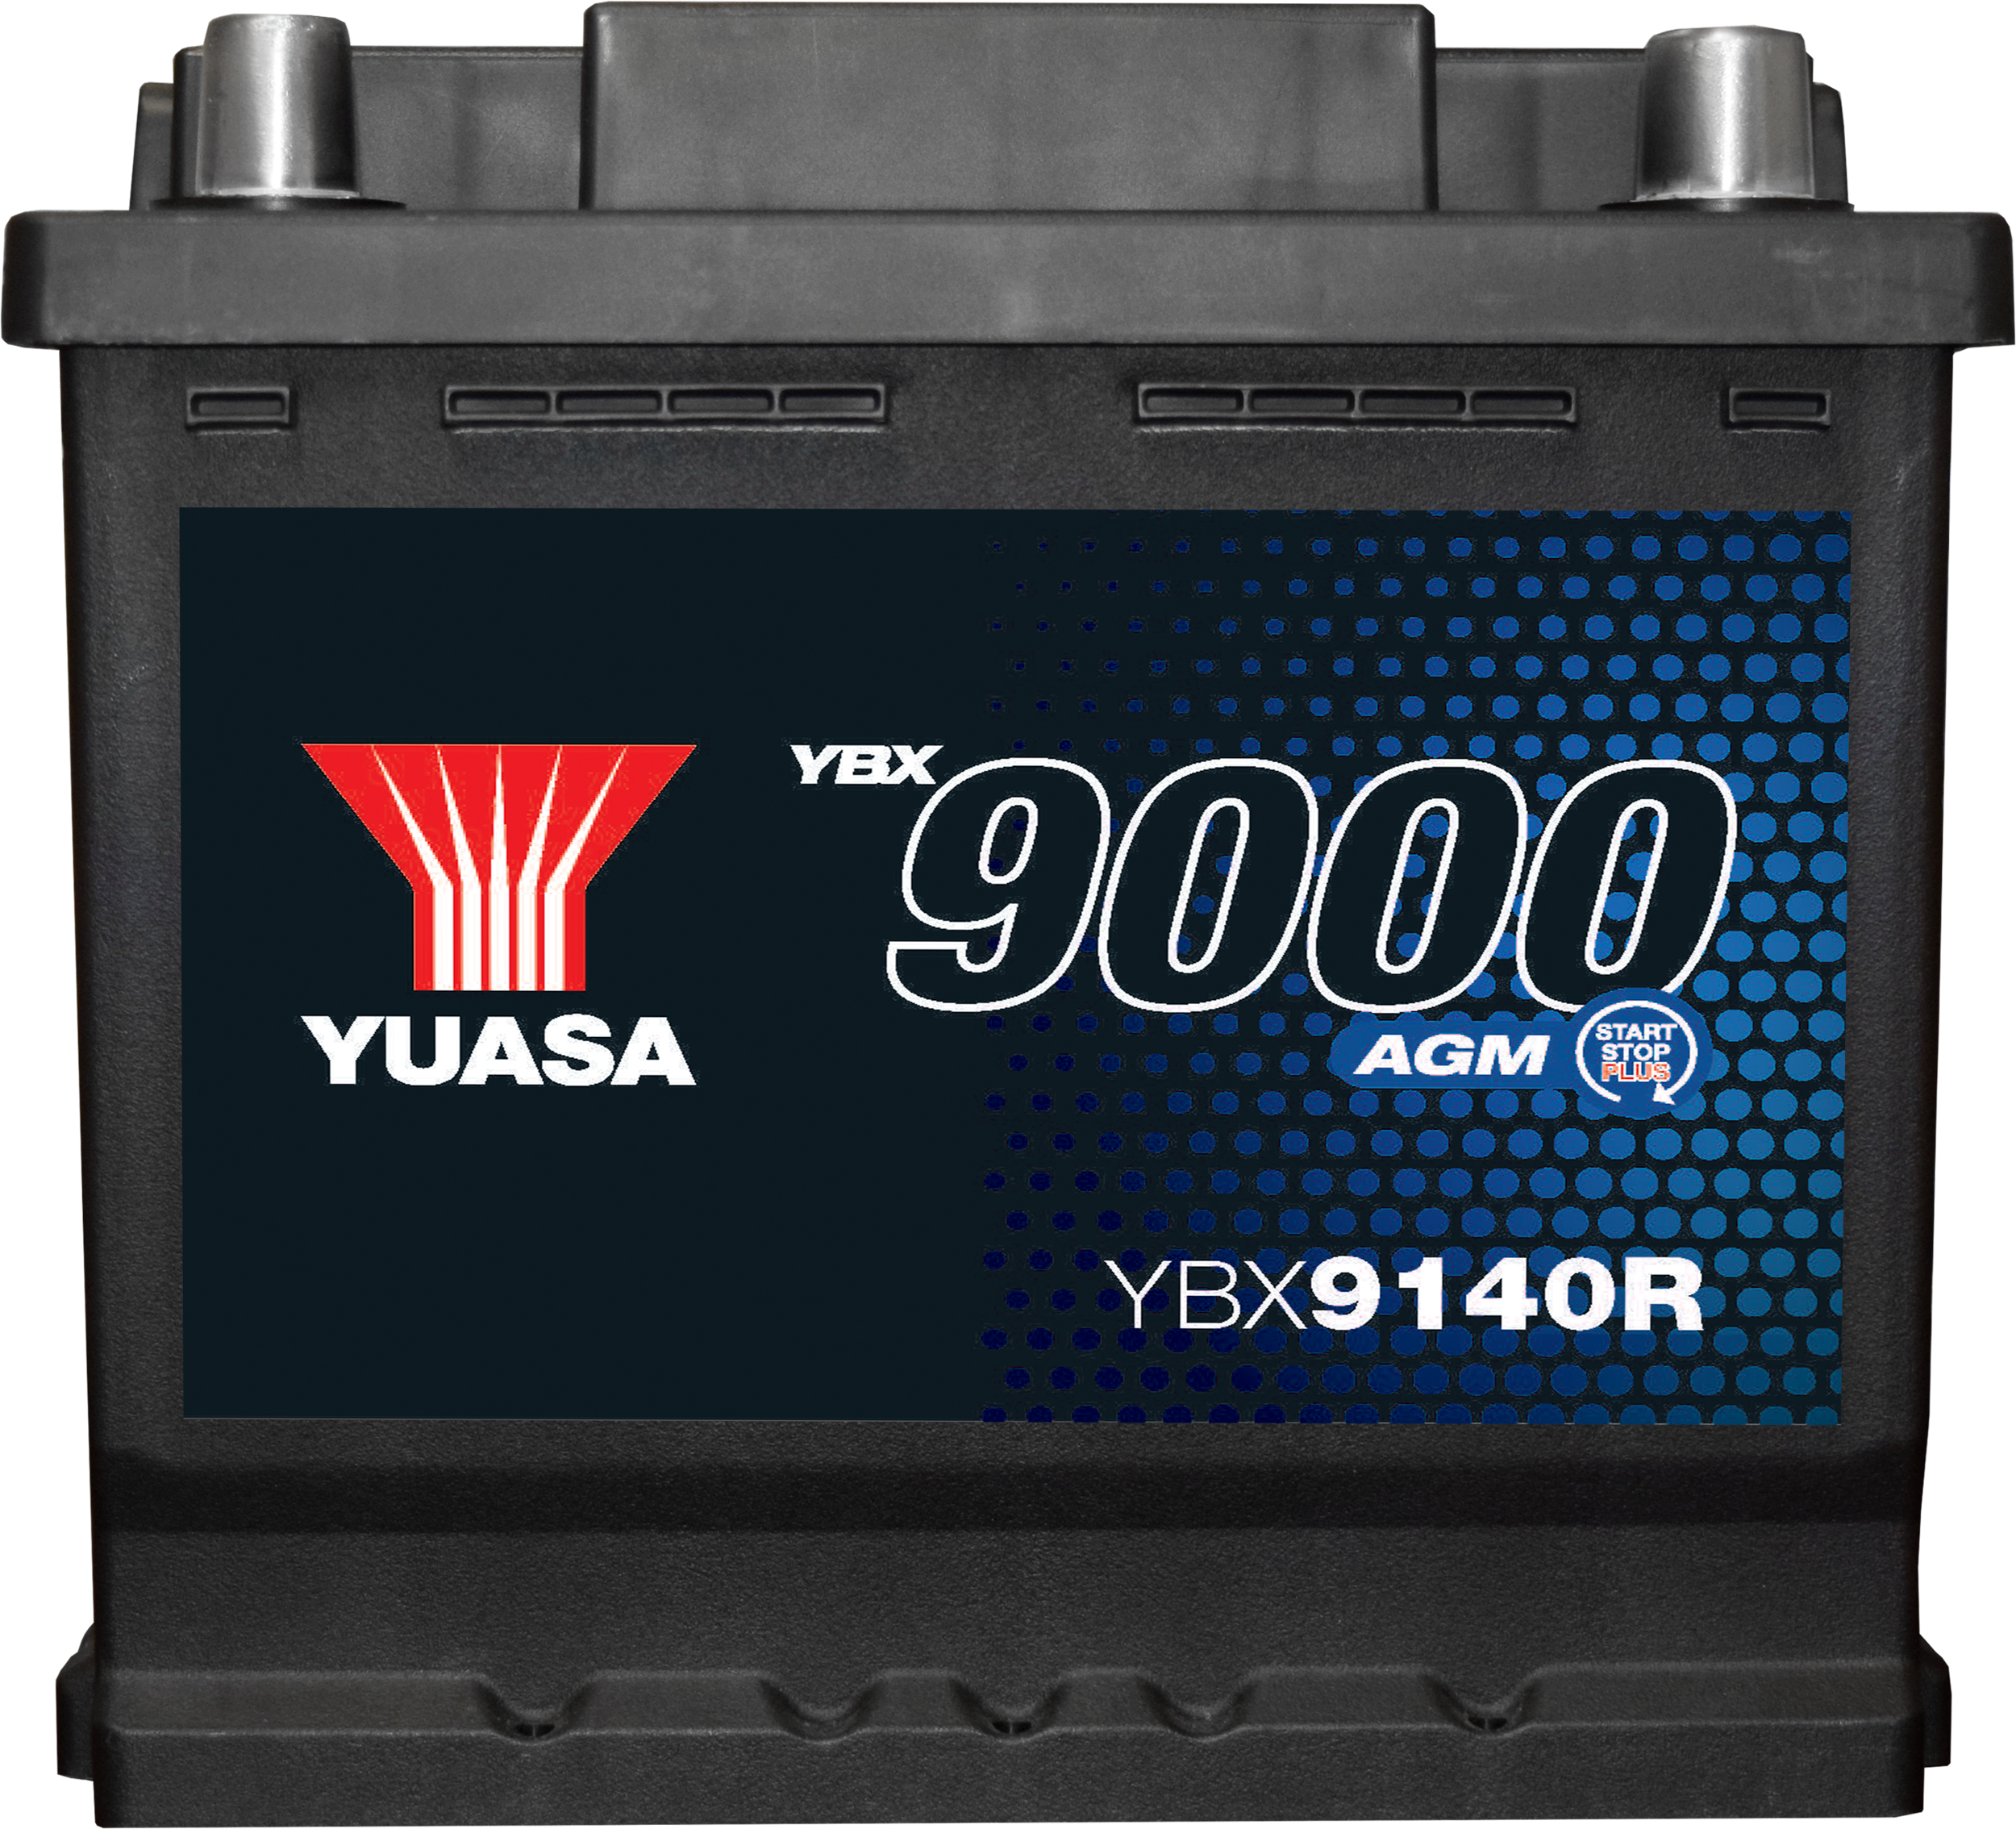 Yuasa - Ybx9140r Agm - Spill-proof - YBXM79L1560RAN